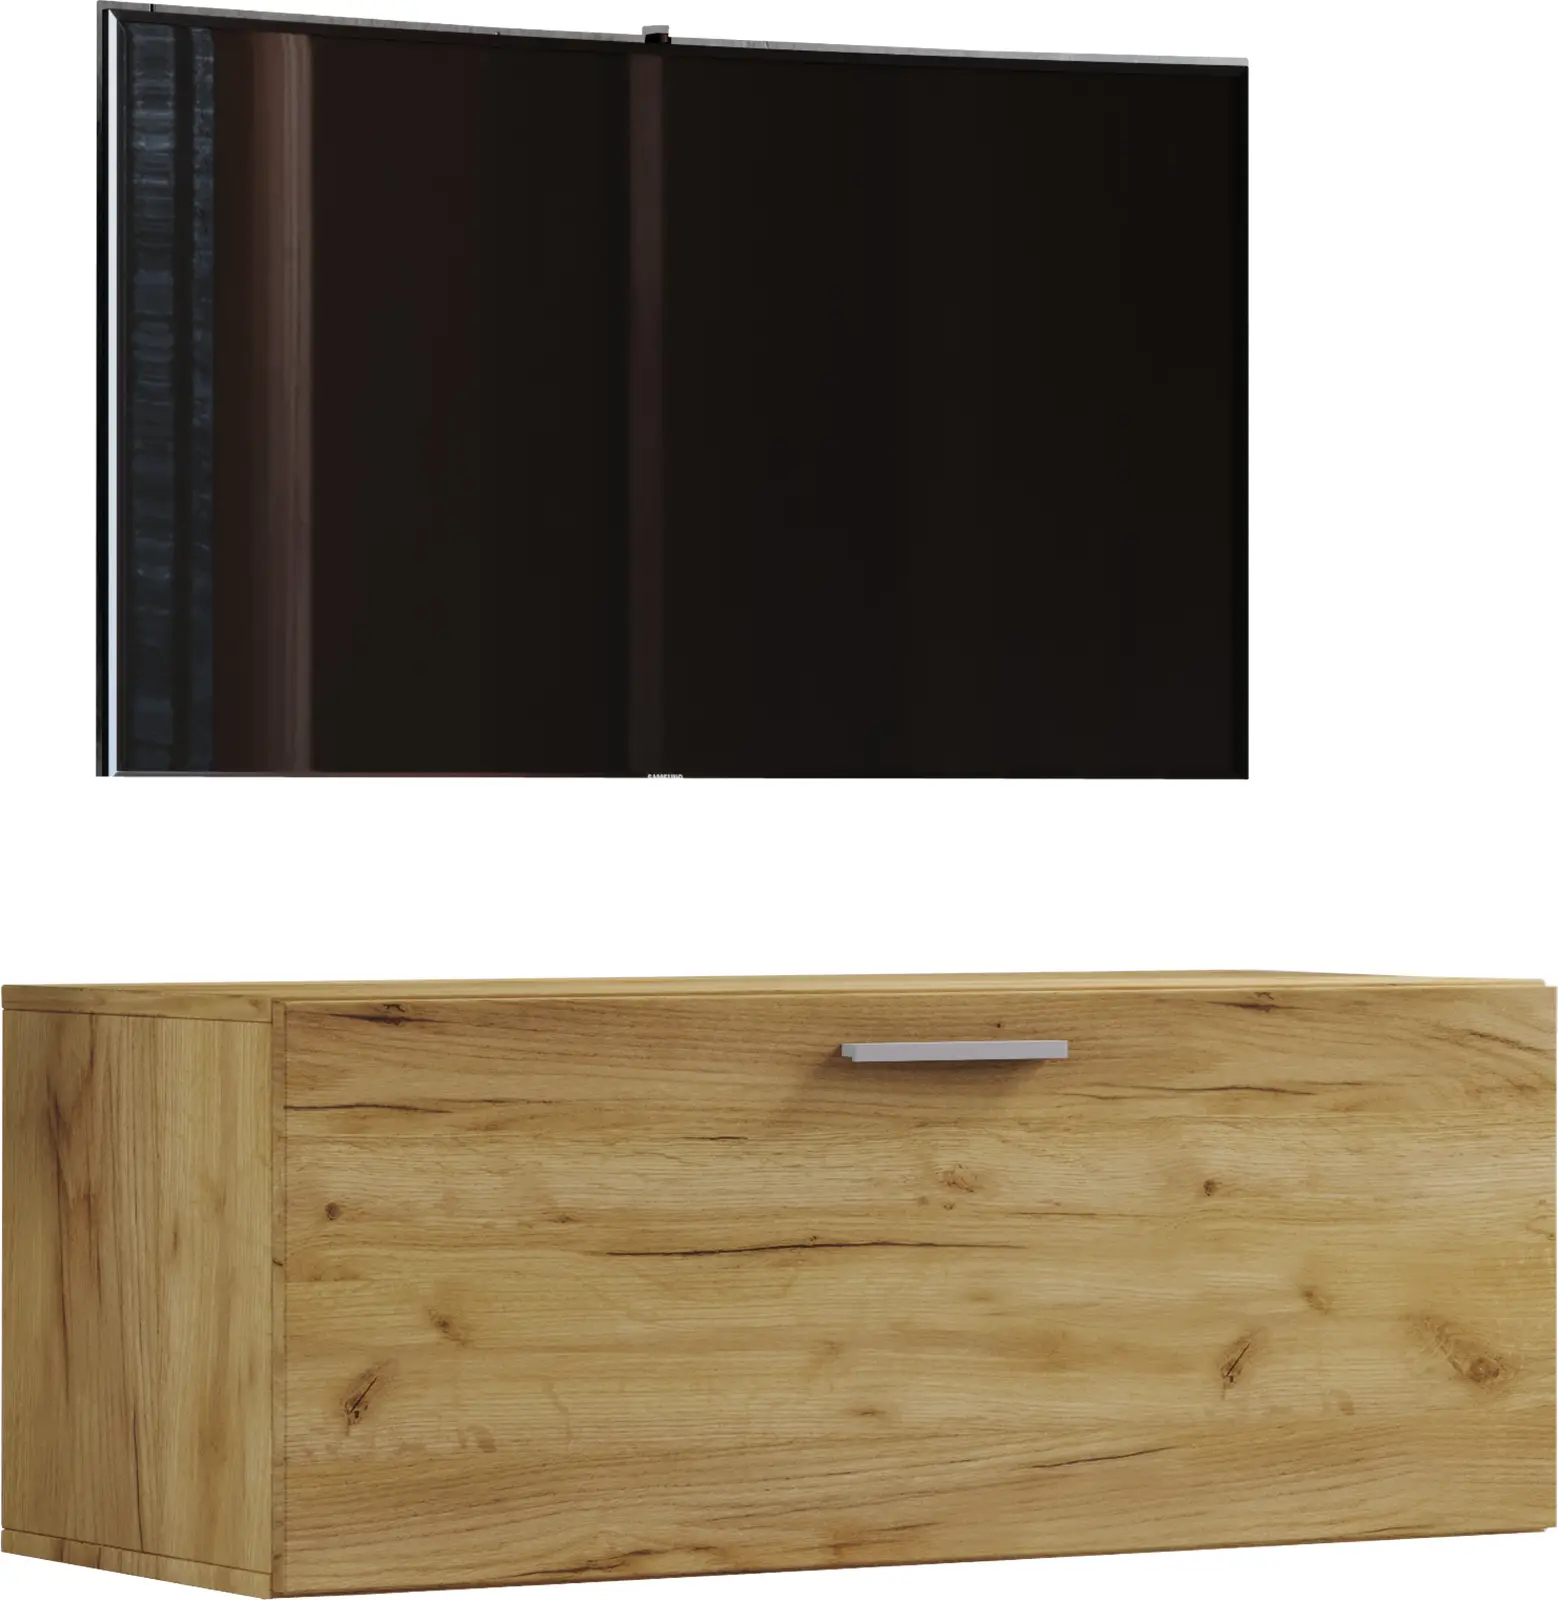 Holz Lowboard Fernsehschrank Fernso 95.0